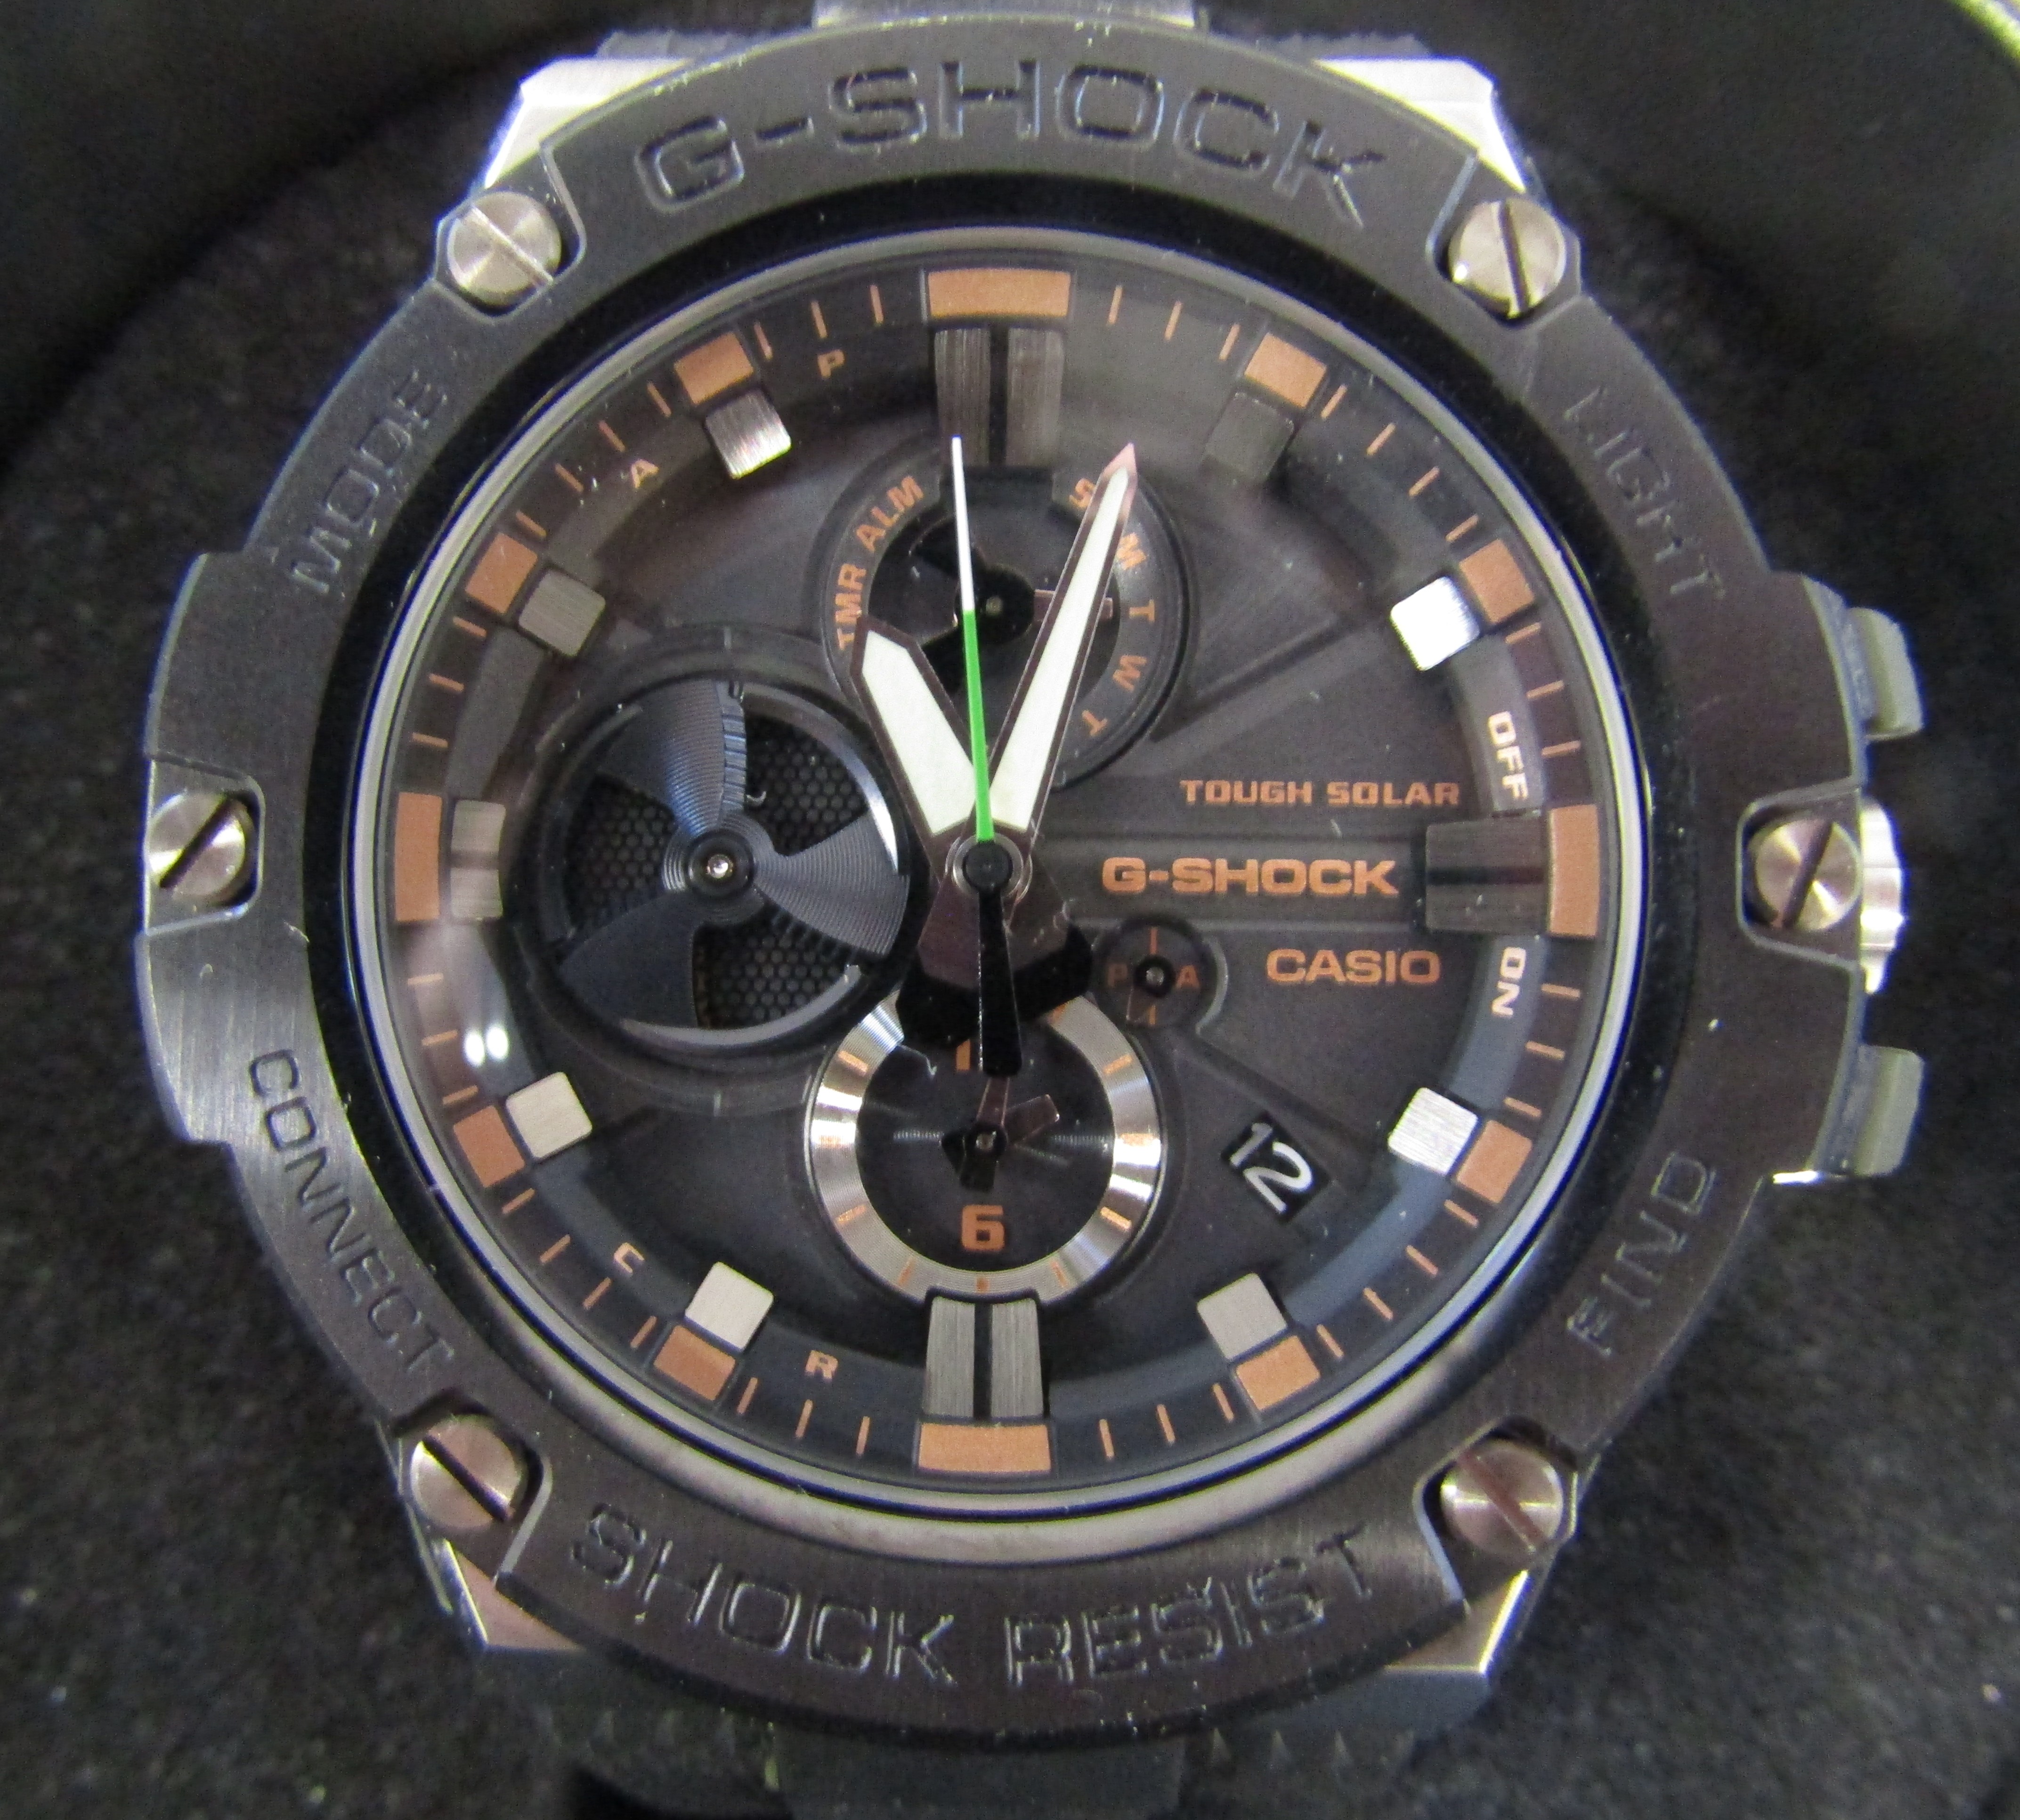 7 Casio G-Shock watches - 2 x 5590 GA-2000 one with box - 5513GST-B100 - 5637 GA-900A - 240 DW- - Image 4 of 15